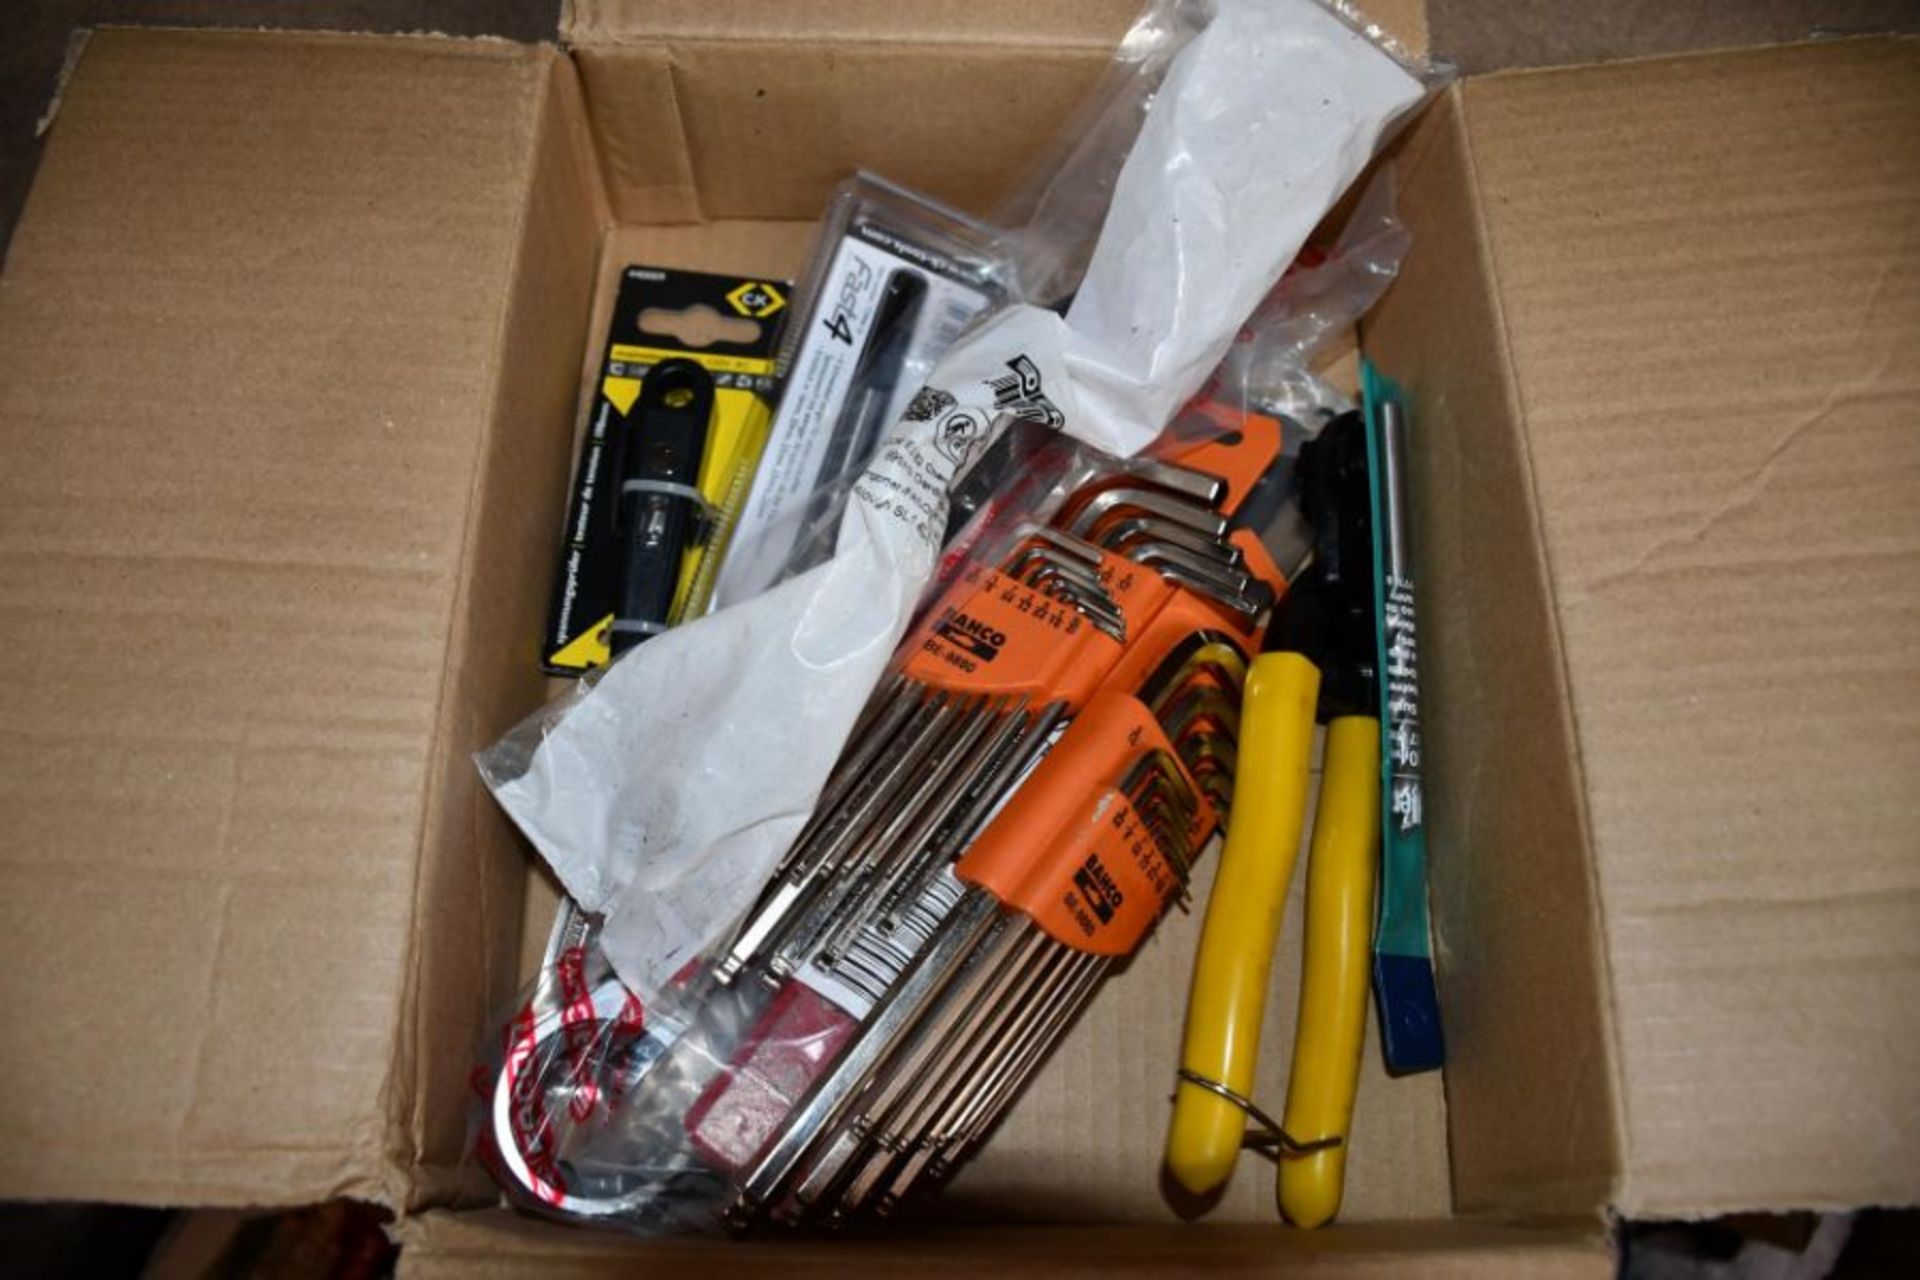 A quantity tools to include a C.K 440009 Mainstester, a C.K T2944-16 Fast 4 drill bit, a Facom STD C